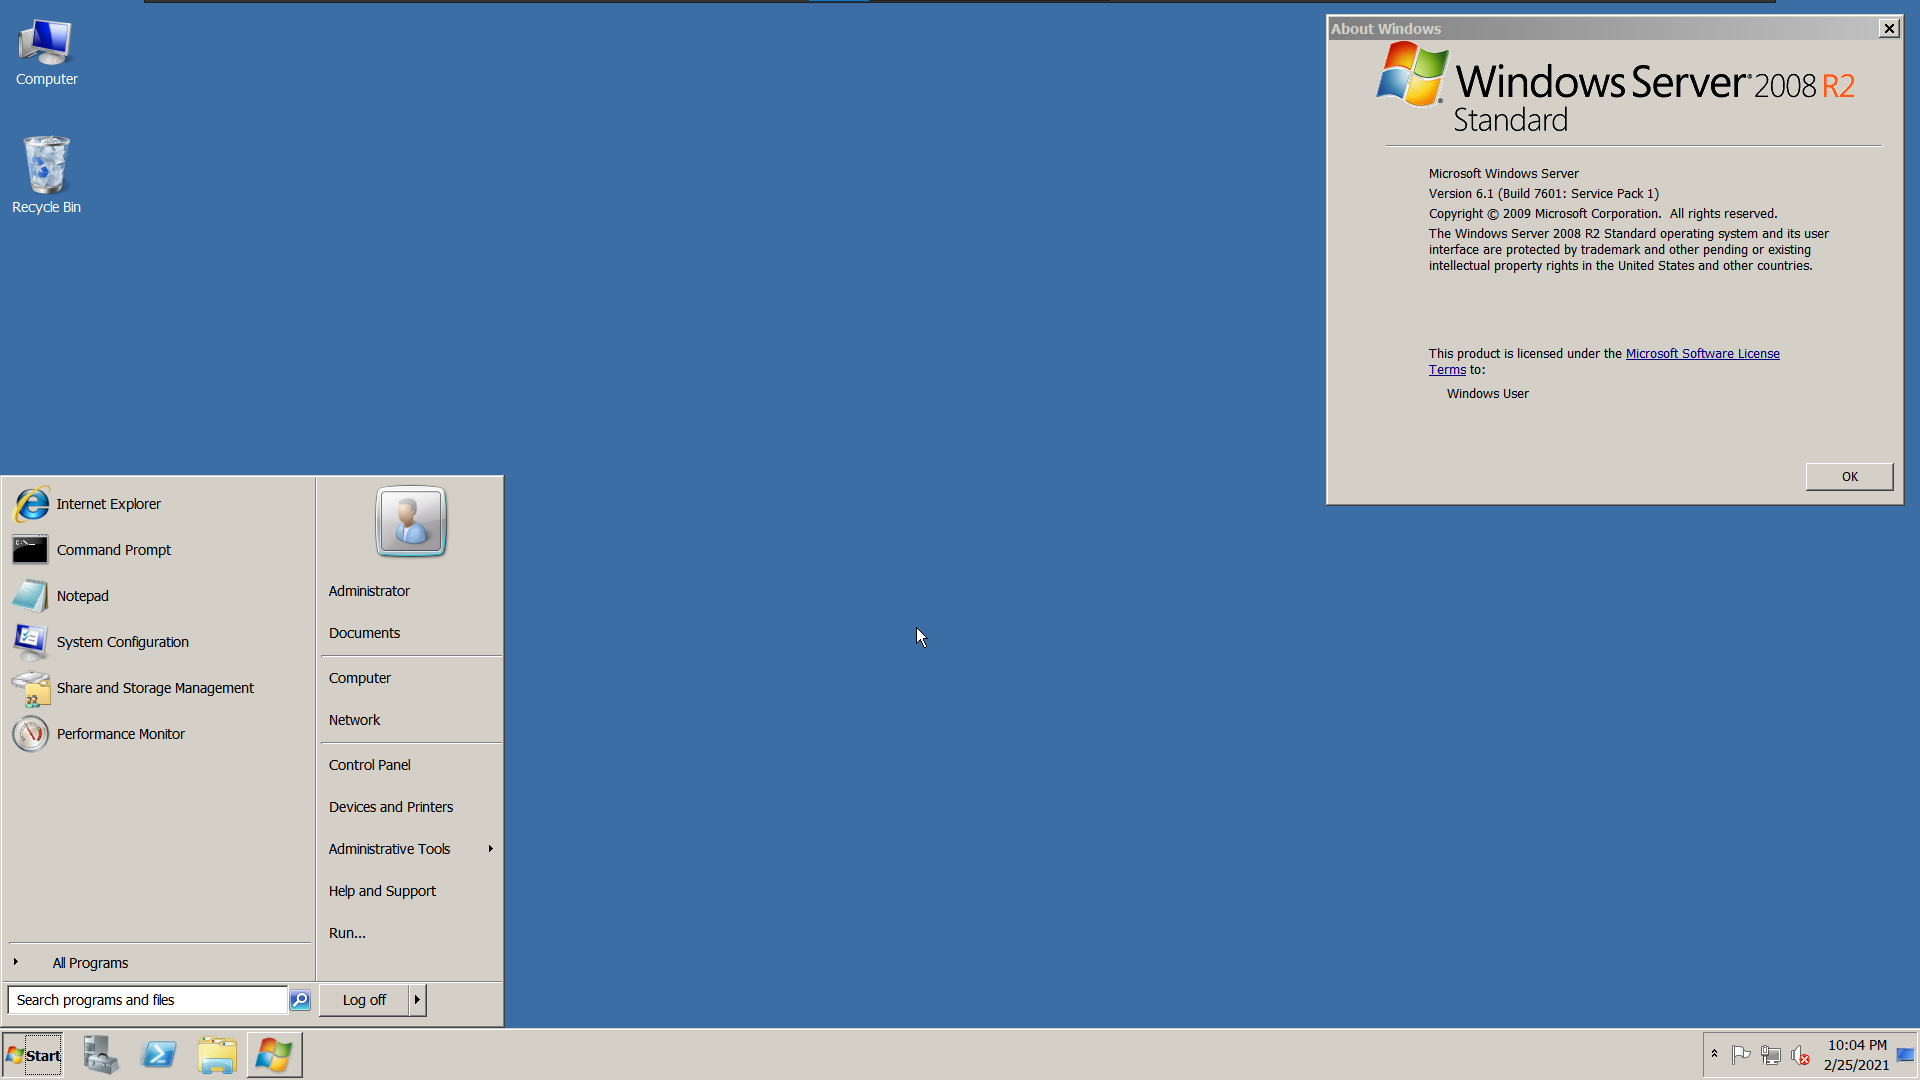 Windows server 2008 r2 download 800 percentage volume vlc player download for windows 8